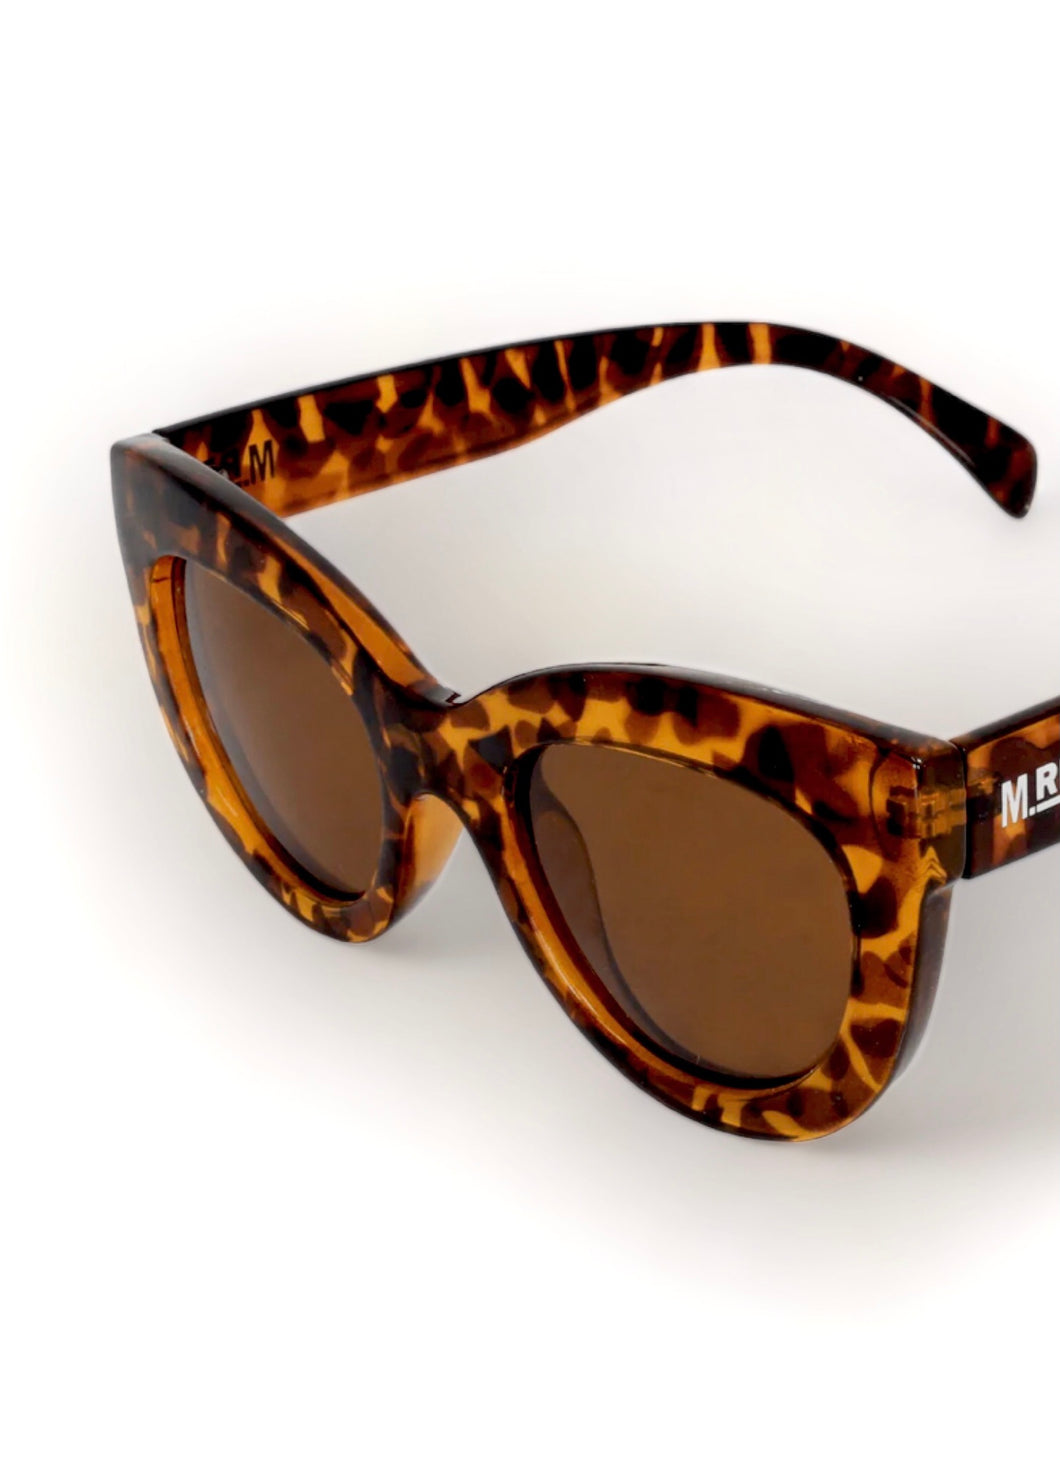 Sunglasses - Elizabeth Taylor